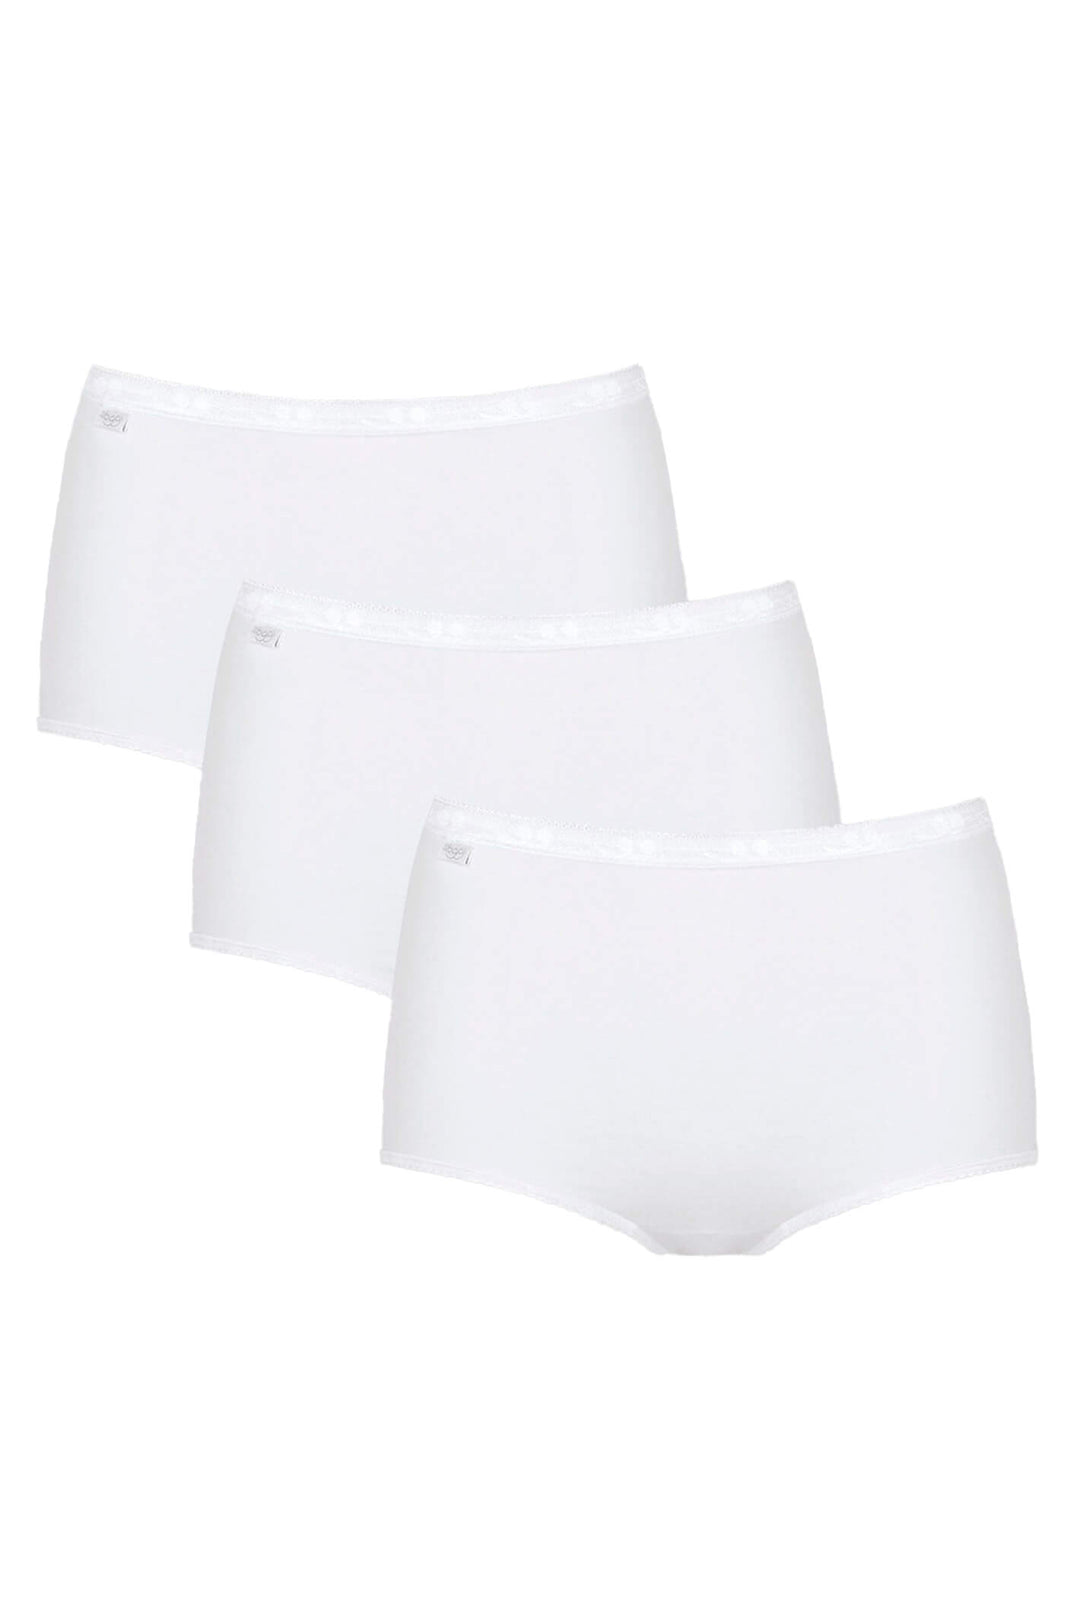 Sloggi Basic+ 3-Pack Maxi Cotton Briefs White 10028378 0003 - Shirley Allum Boutique